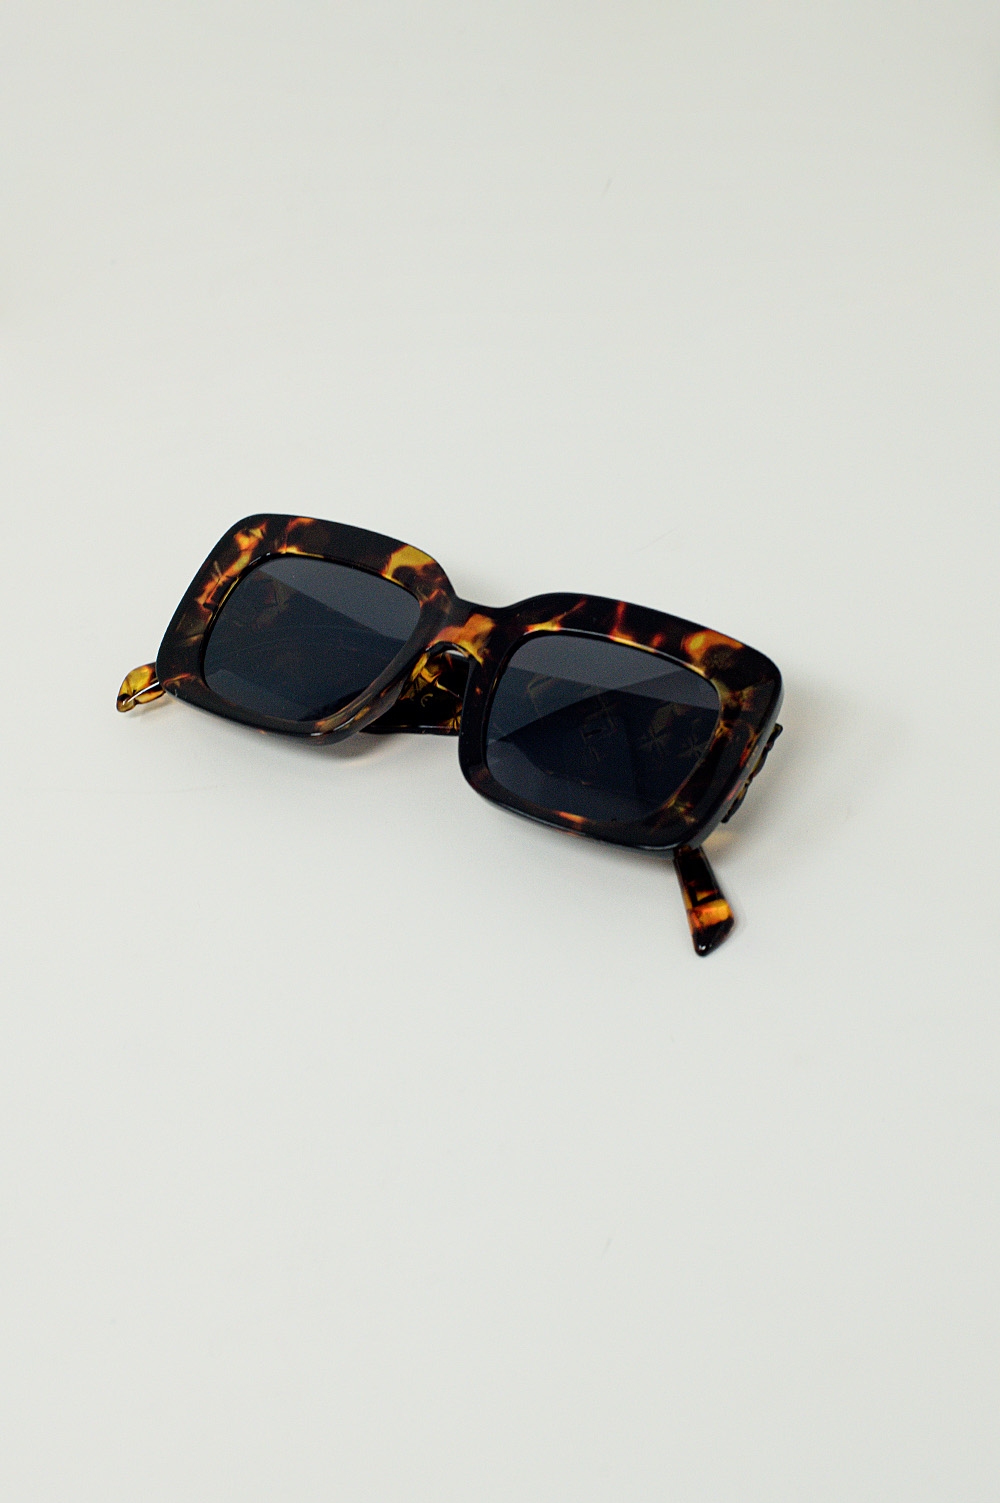 Gafas de sol rectangulares extragrandes en tono Tortoise Shell vintage